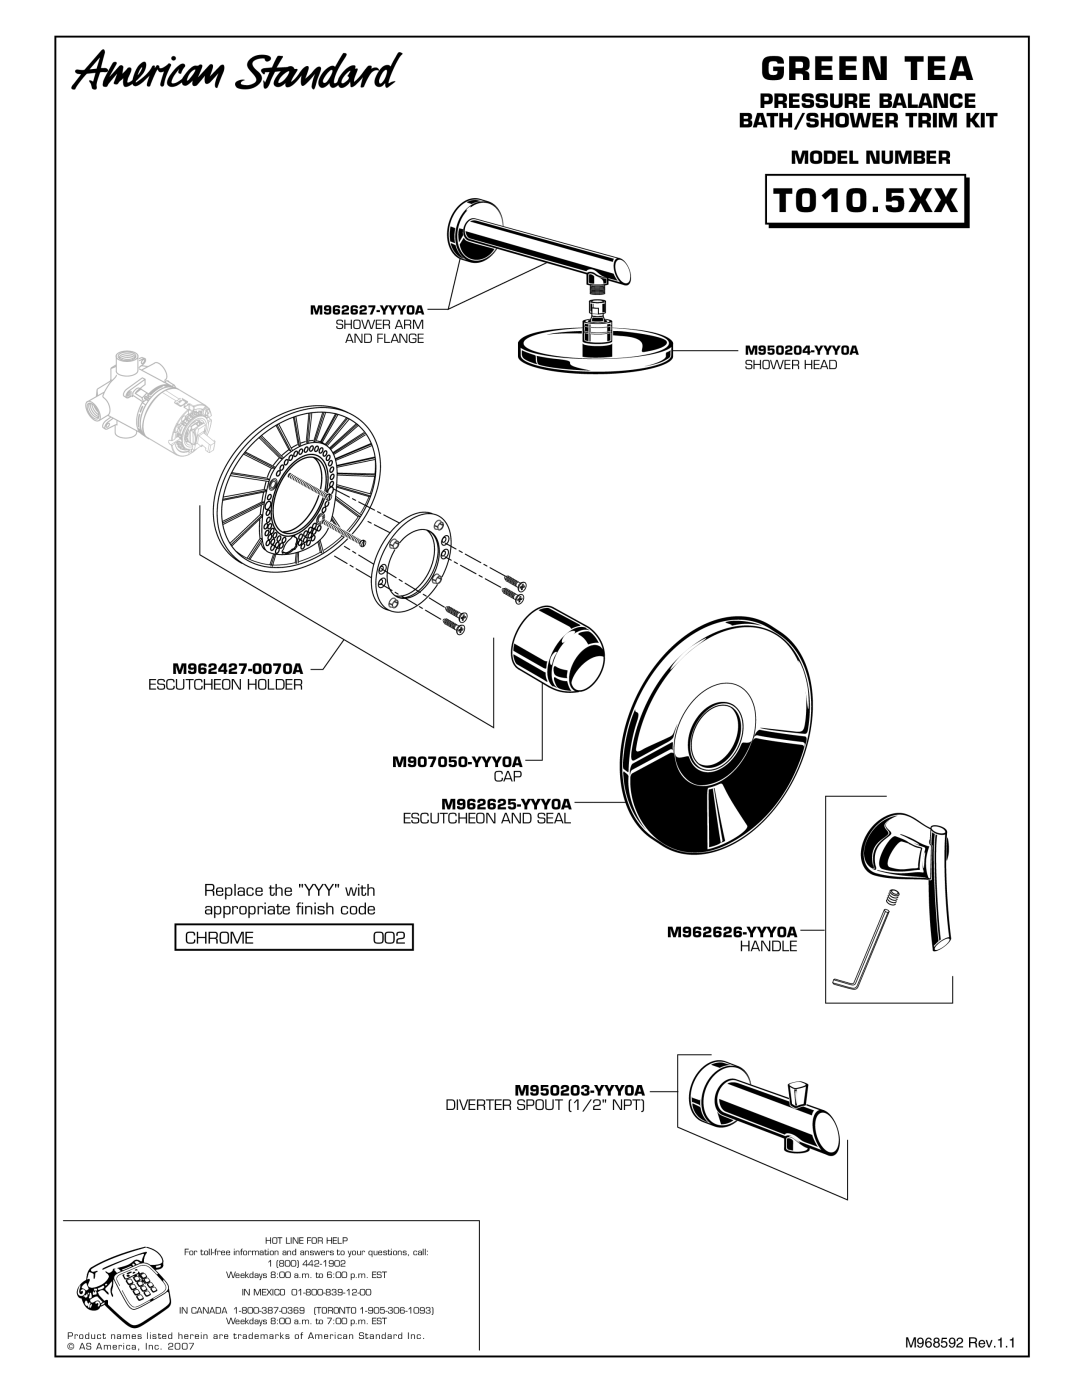 American Standard T010.5XX Pressure Balance Bath/Shower Trim Kit, Green Tea, Model Number, M962427-0070A, M907050-YYY0A 